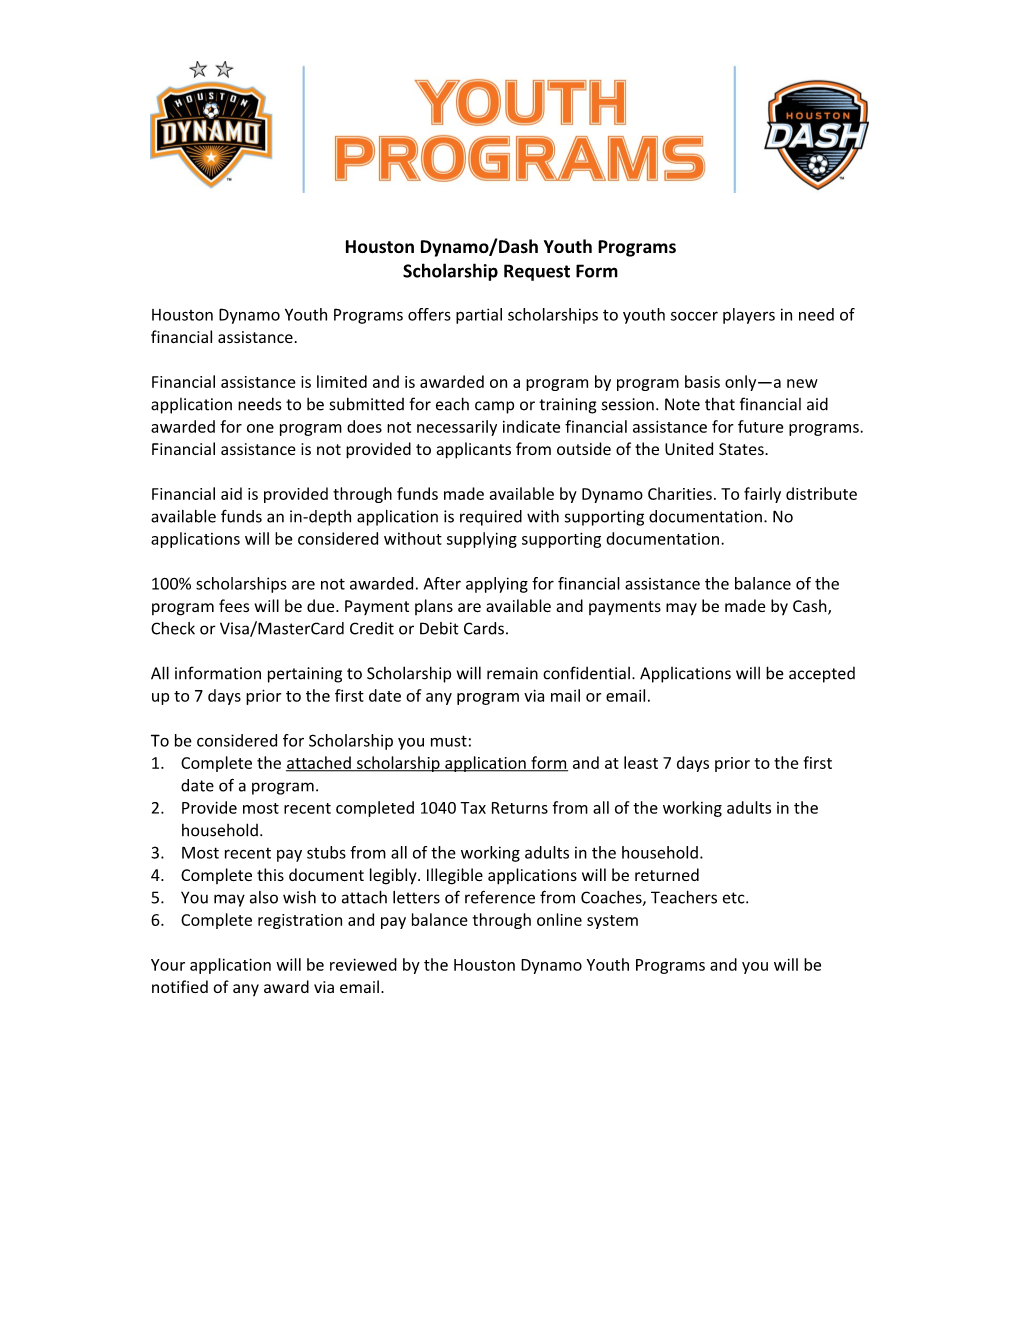 Houston Dynamo Youth Programs